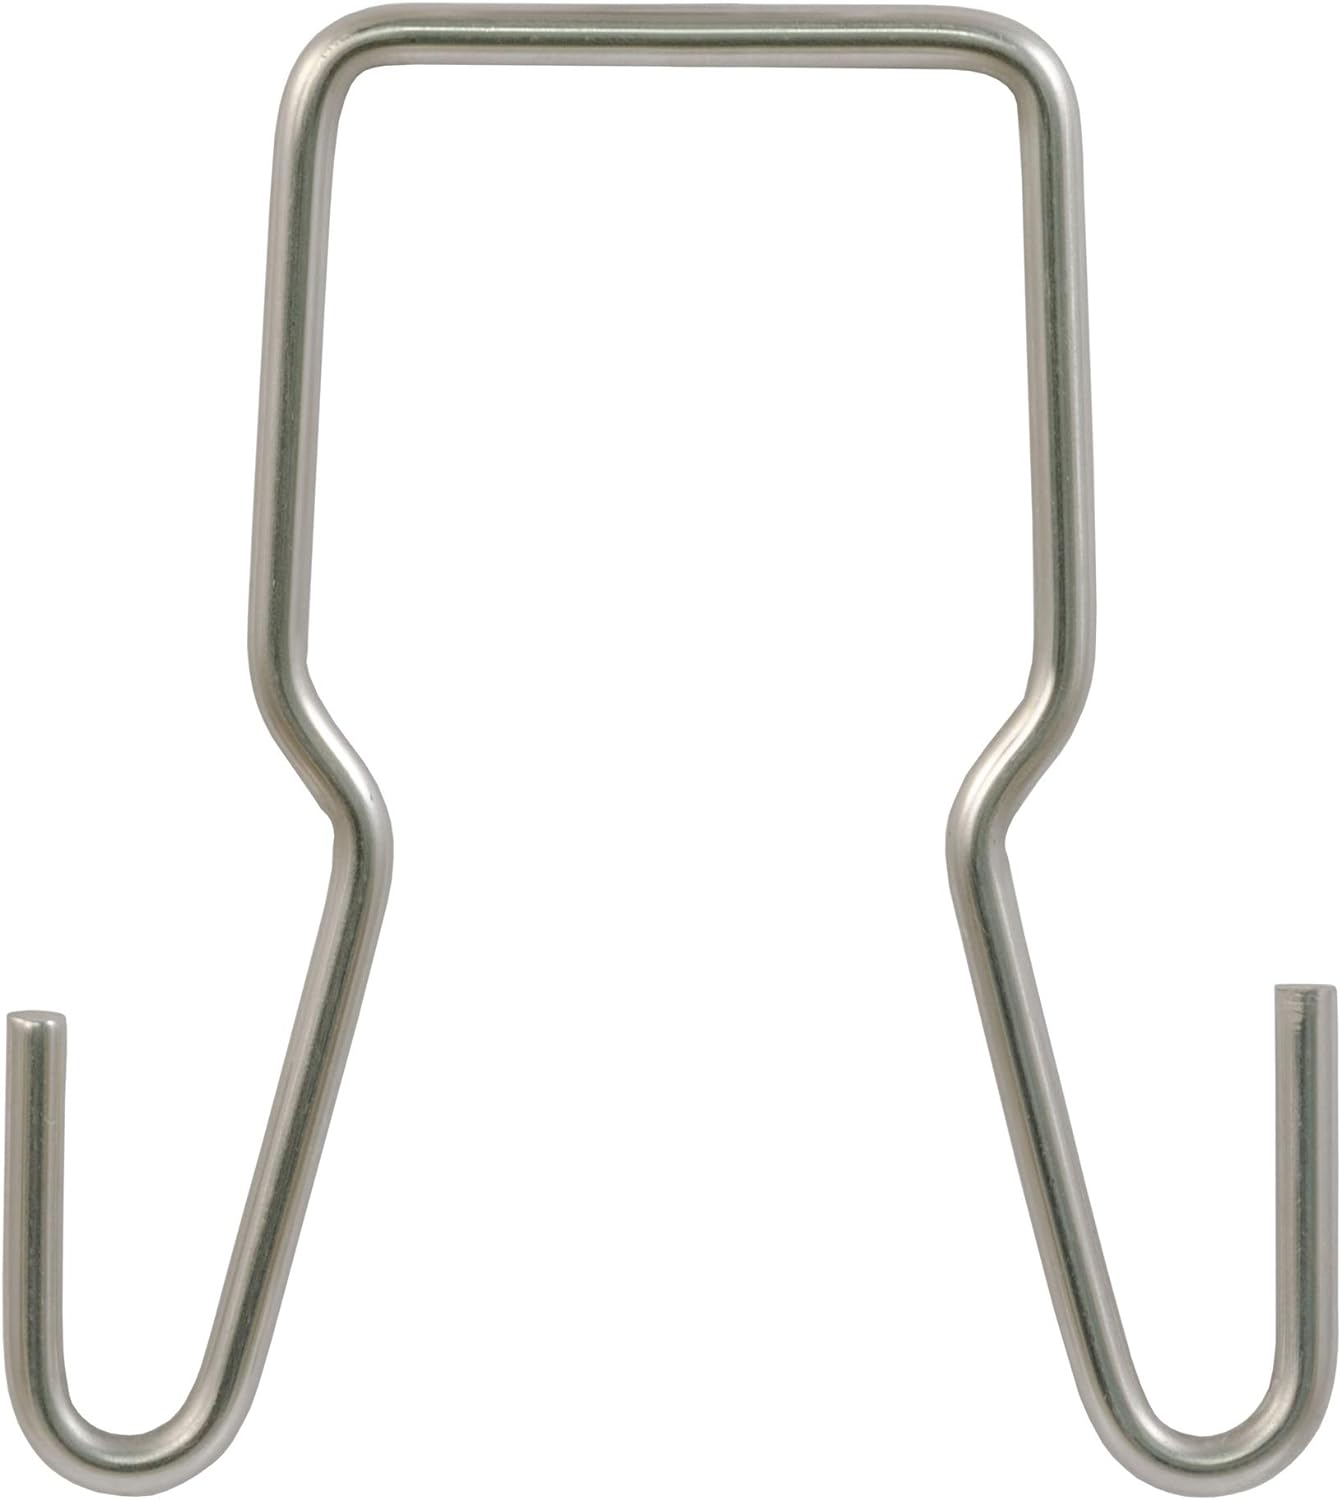 Curt 45807 Trailer Safety Chain Holder Bracket for 2-inch Shank, Clip-On Steel Hanger Hooks